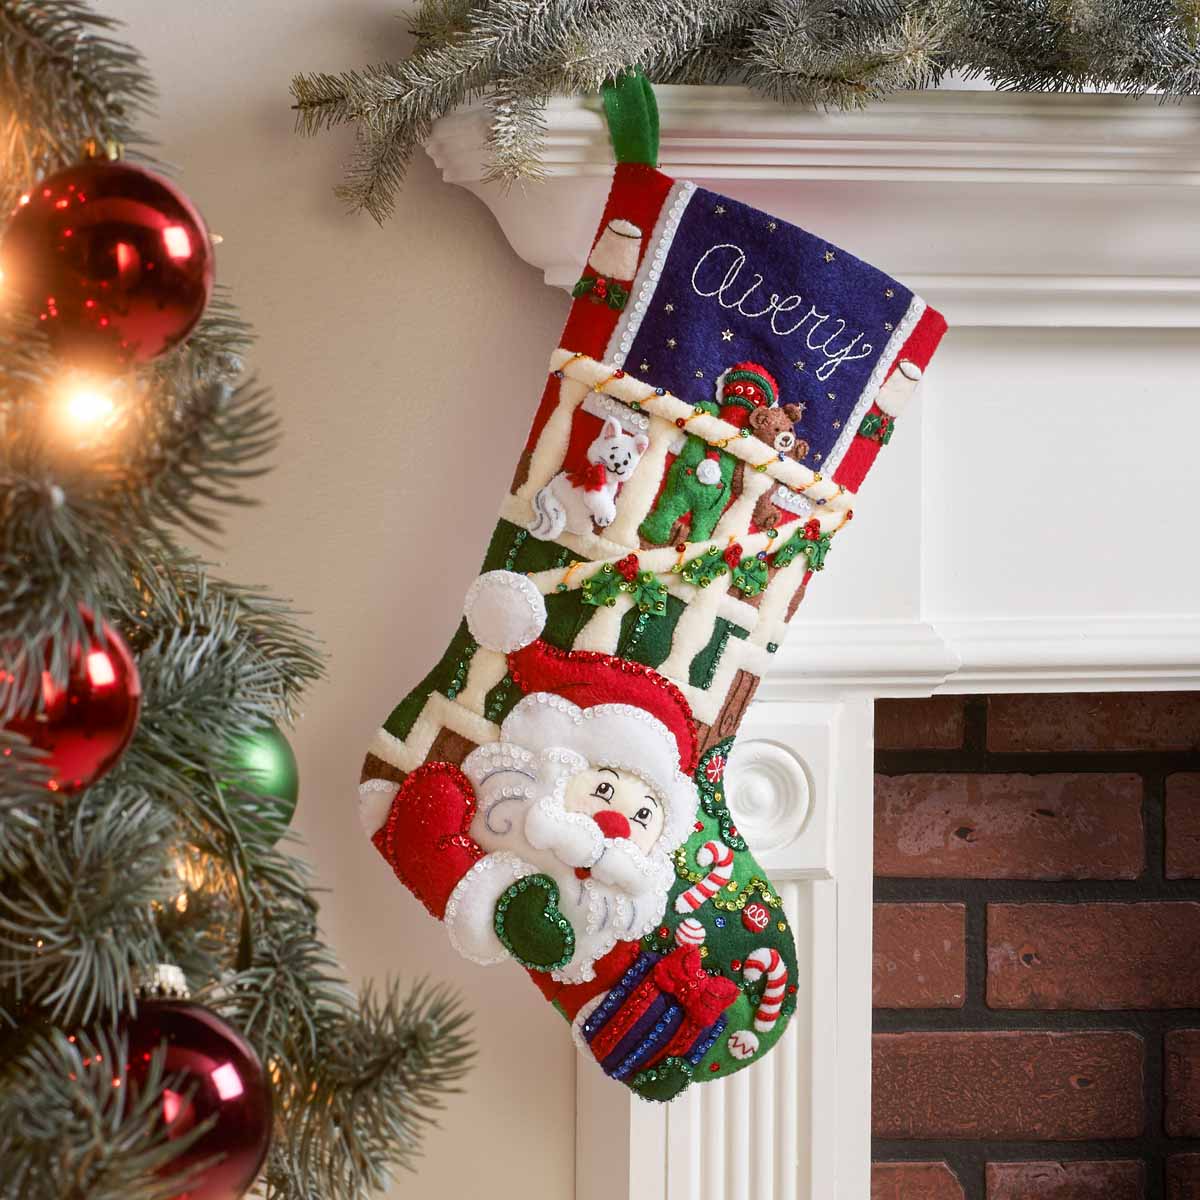 Bucilla ® Seasonal - Felt - Stocking Kits - Watching For Santa - 89244E